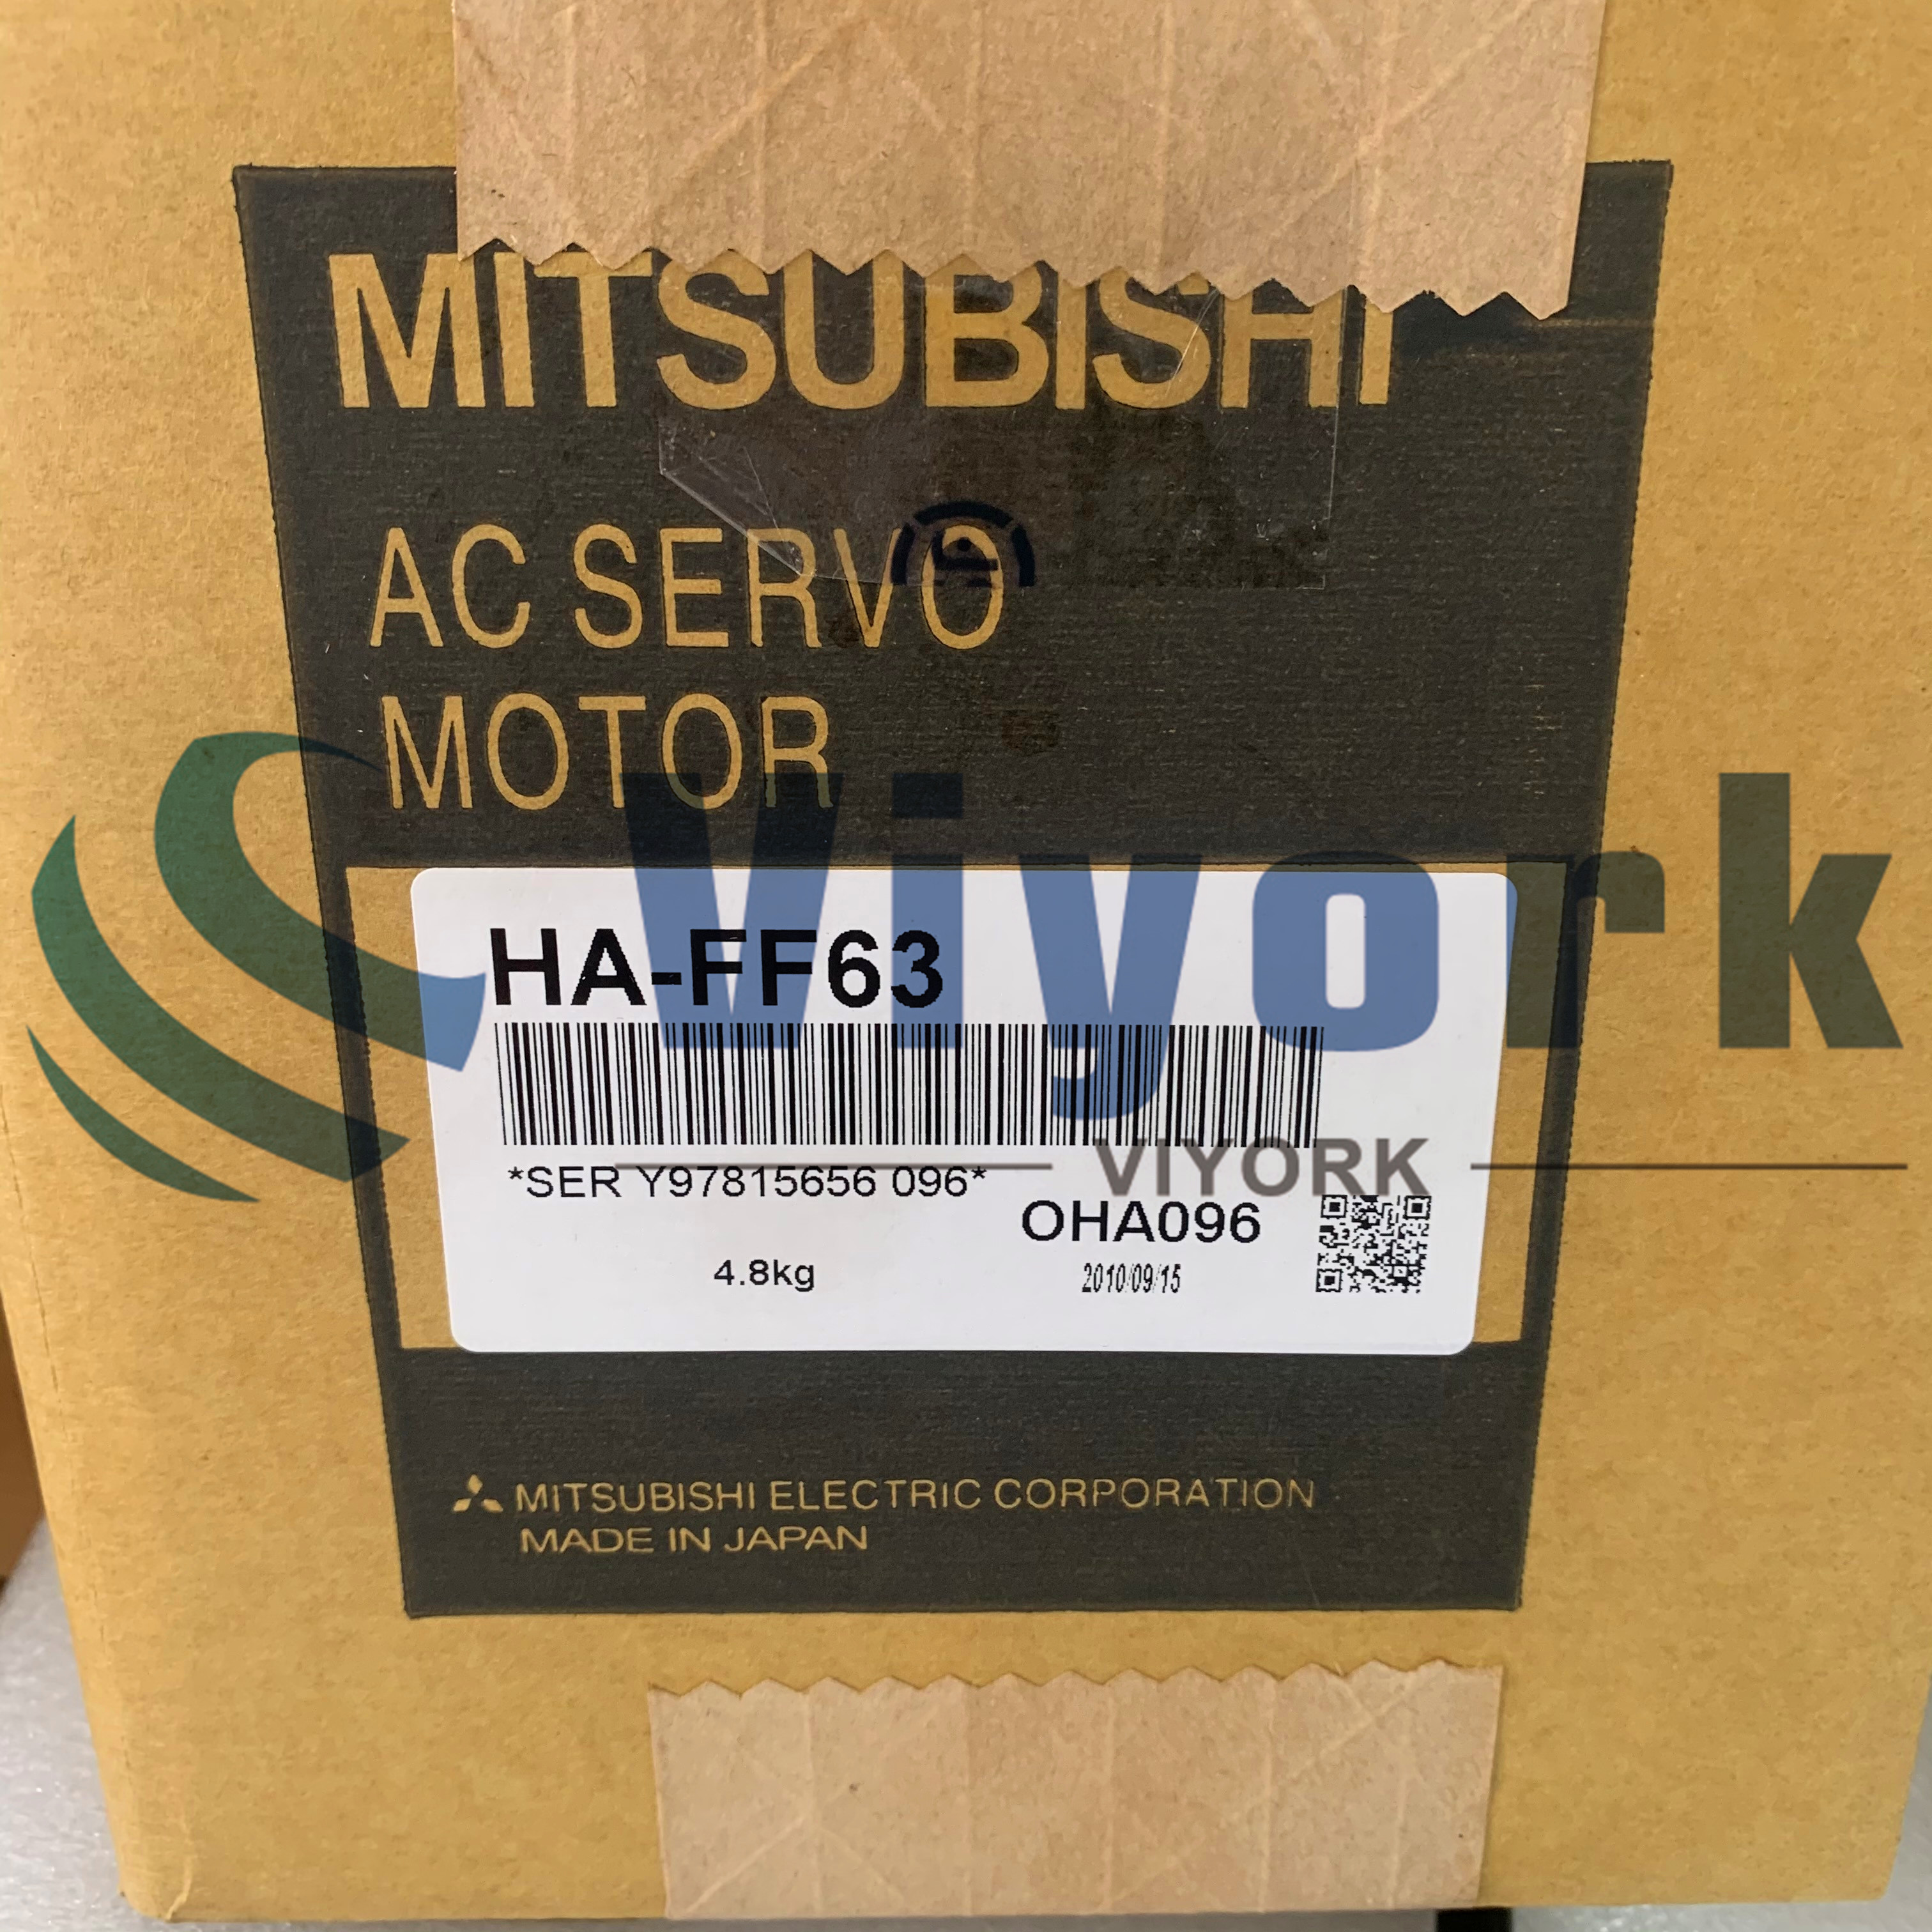 Mitsubishi HA-FF63 SERVO MOTOR AC 600W KEY CE/UL 3000R/MIN 129V NEW